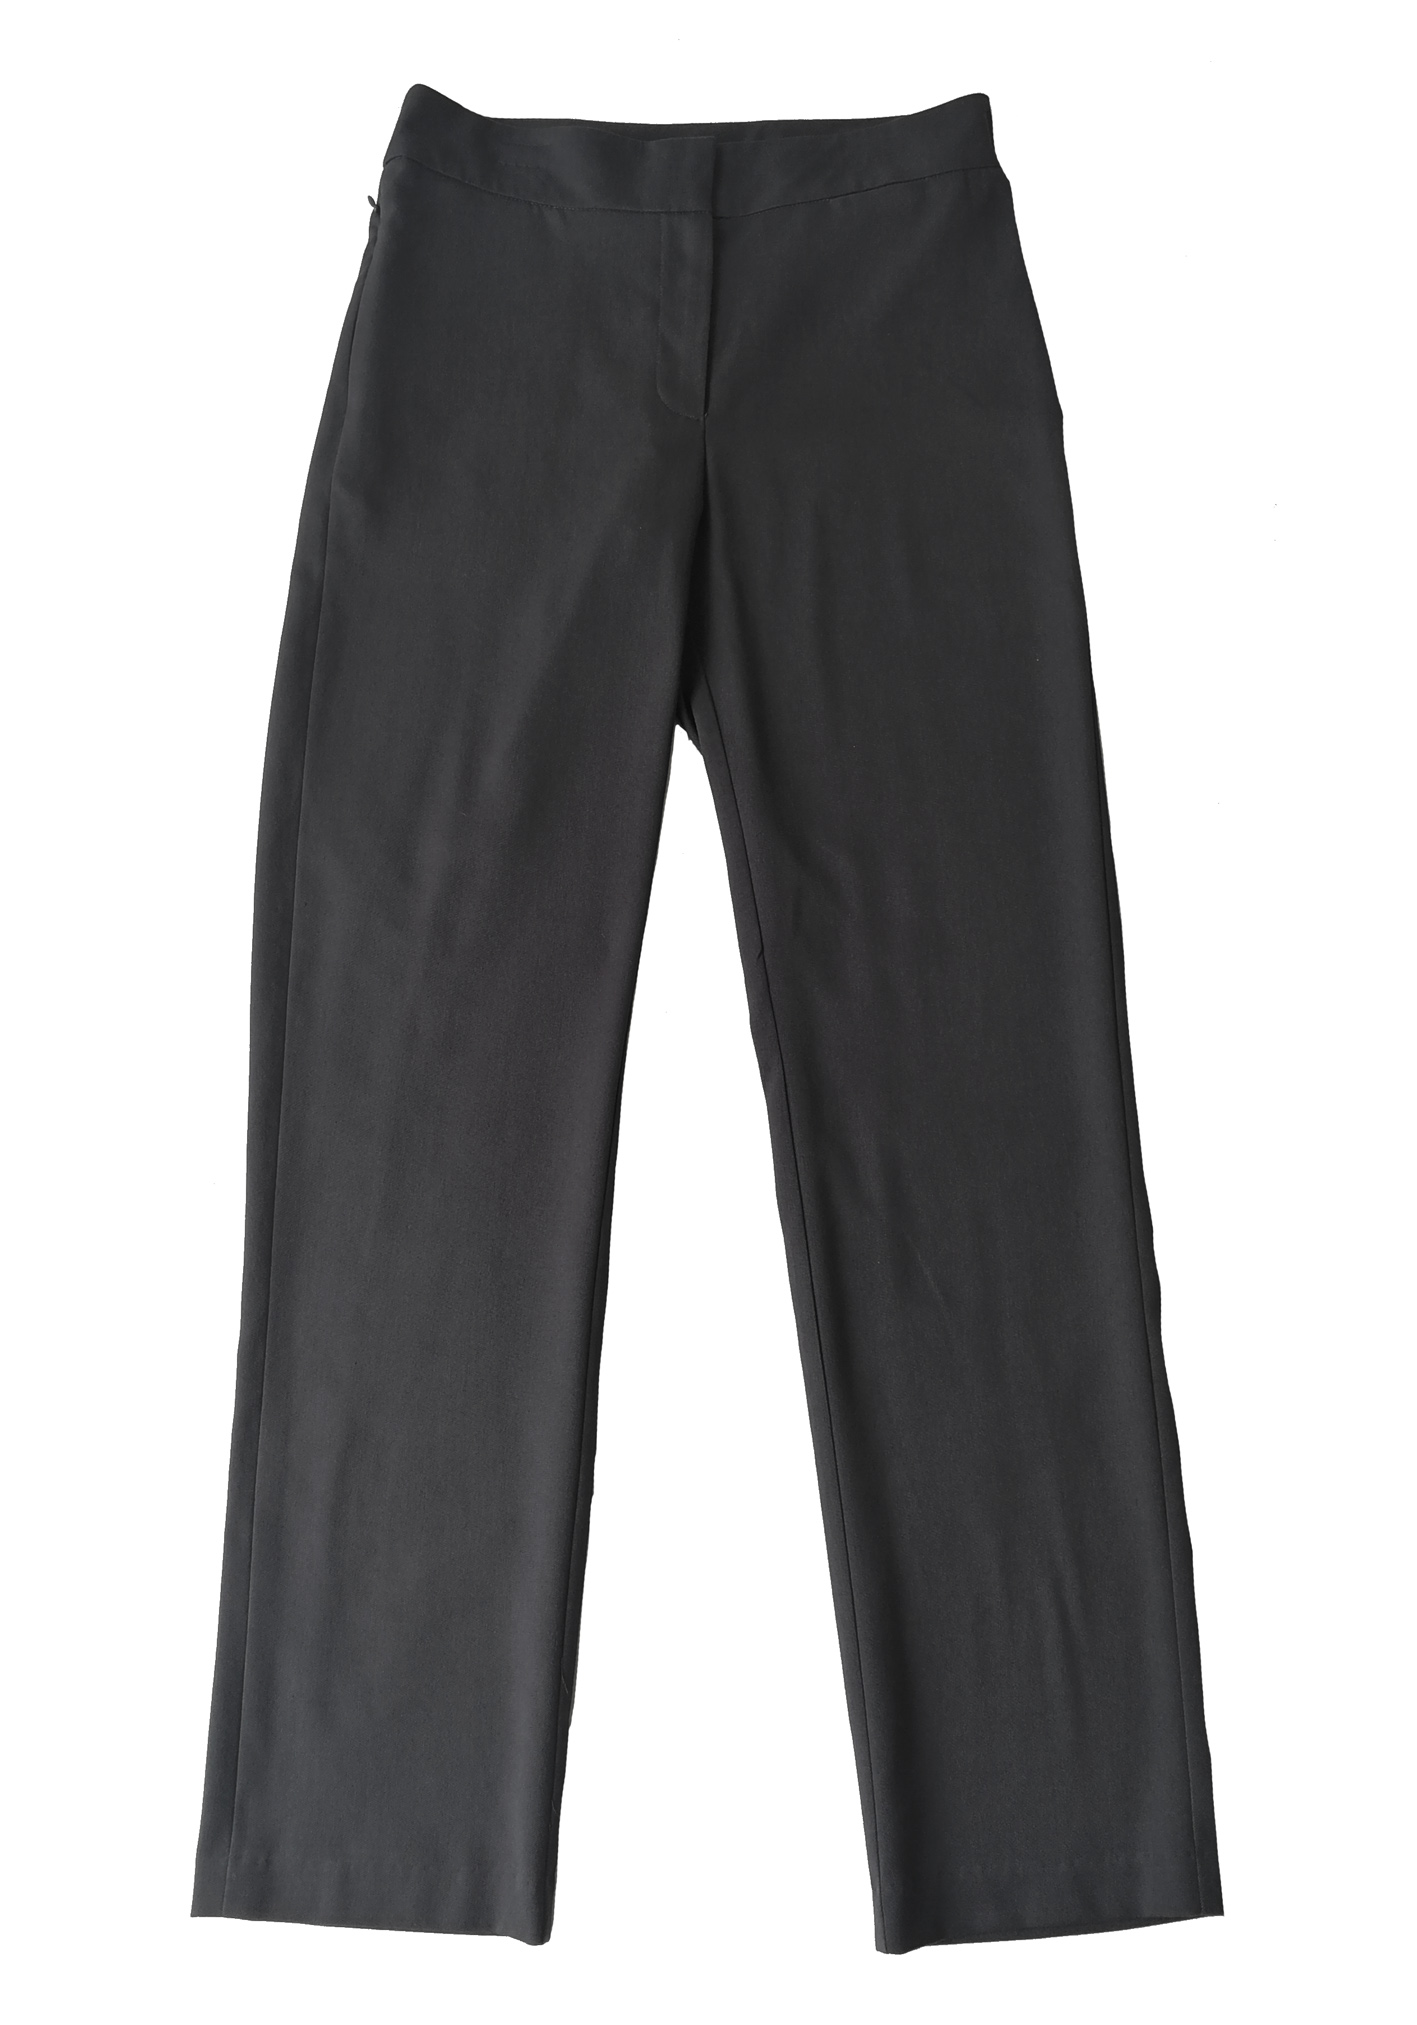 Ssc Balmain Girls Tailored Charcoal Gabardine Pants | Shop at Pickles ...